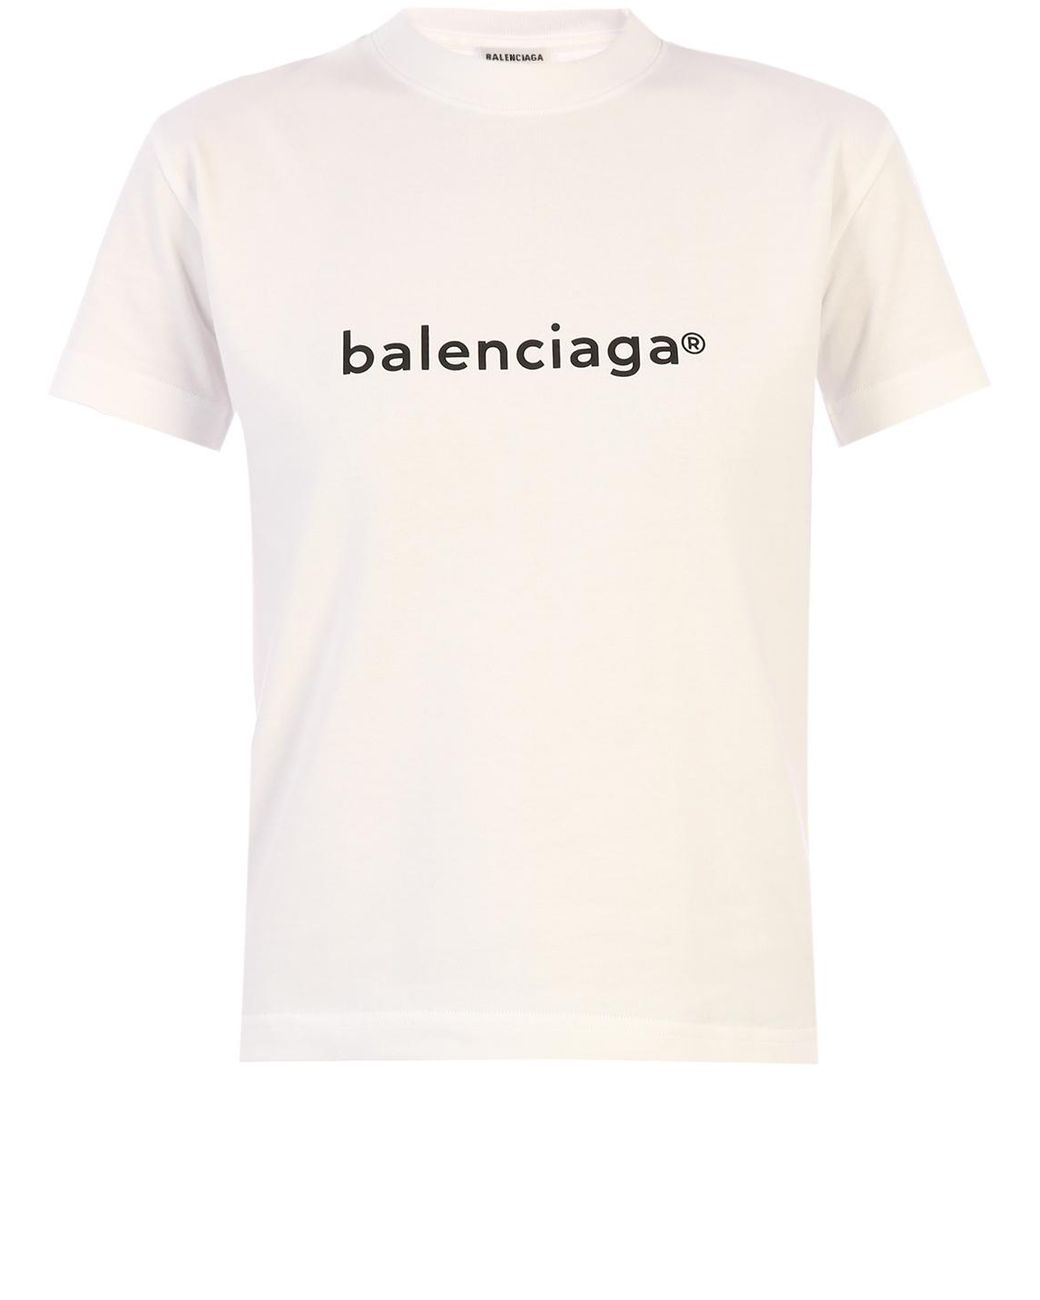 Balenciaga T-shirt 'new Copyright' Logo in White - Lyst